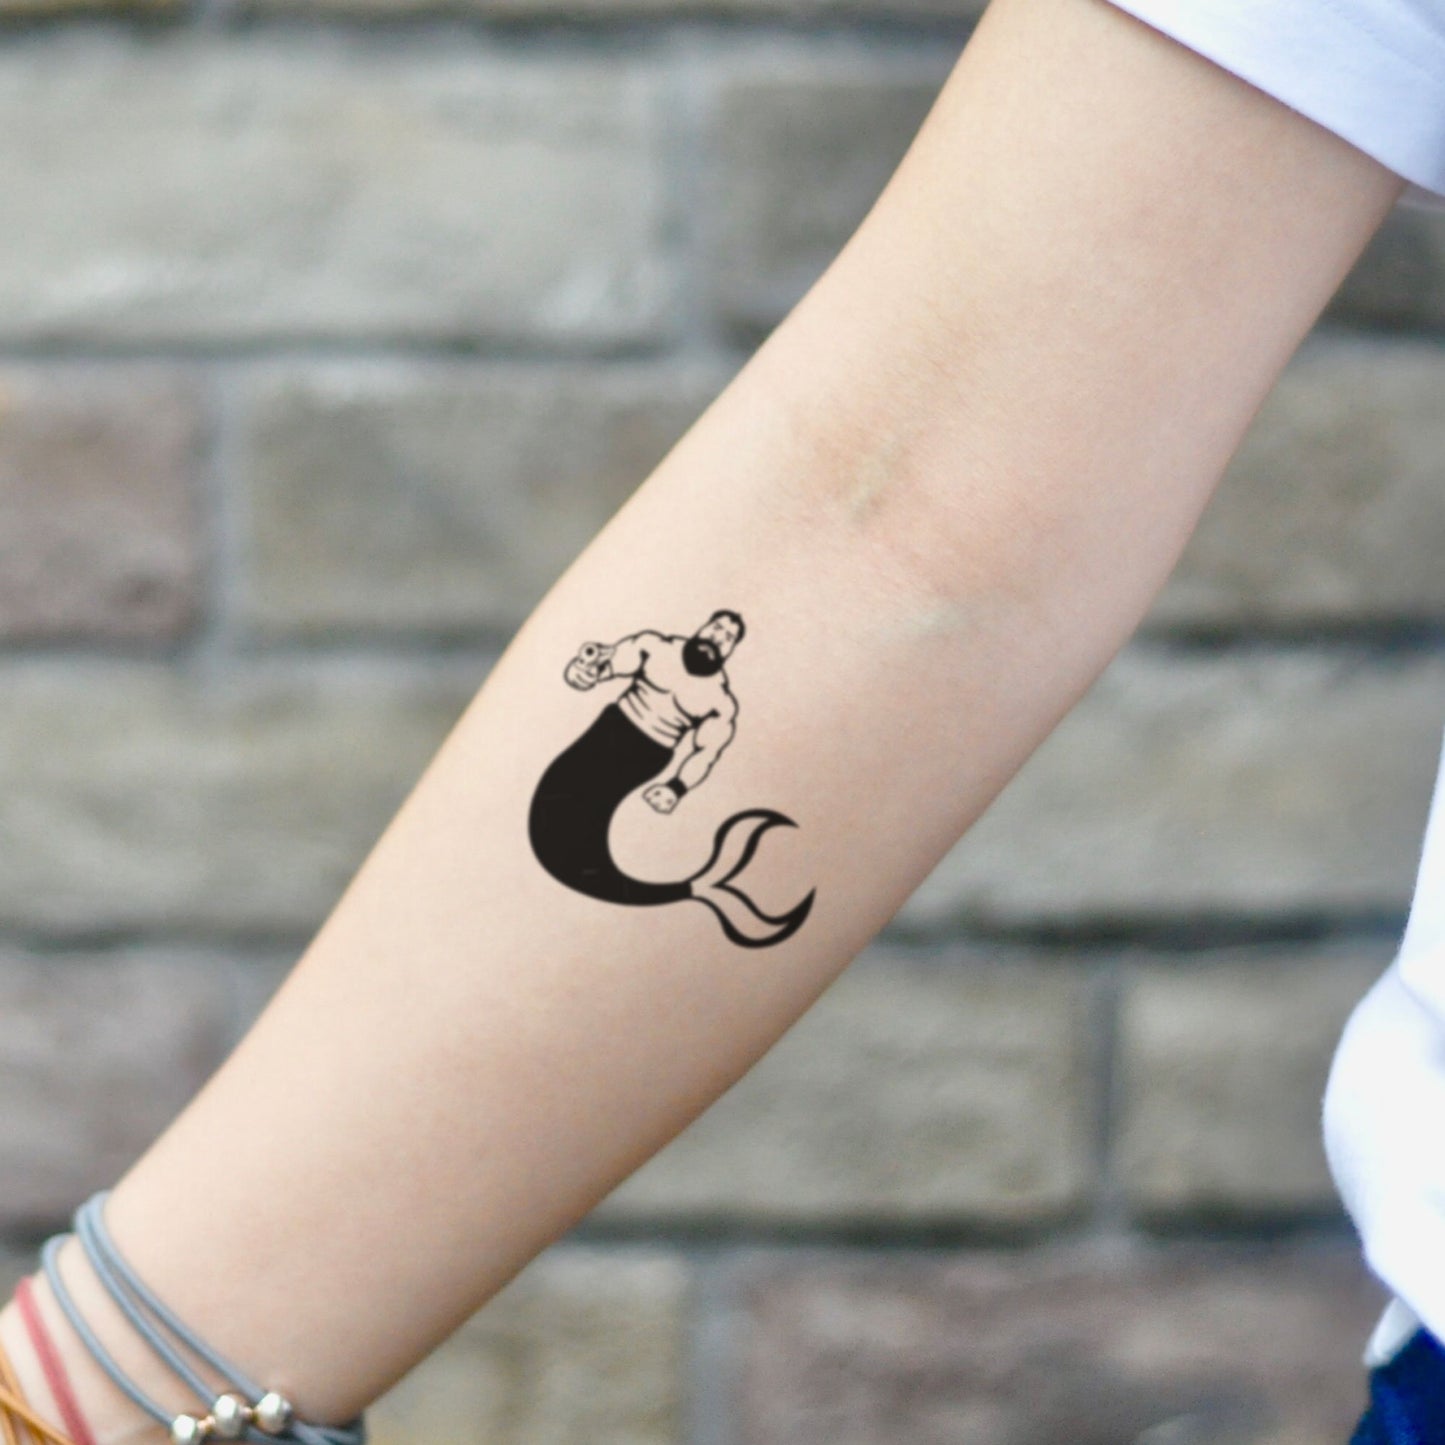 fake small merman illustrative temporary tattoo sticker design idea on inner arm